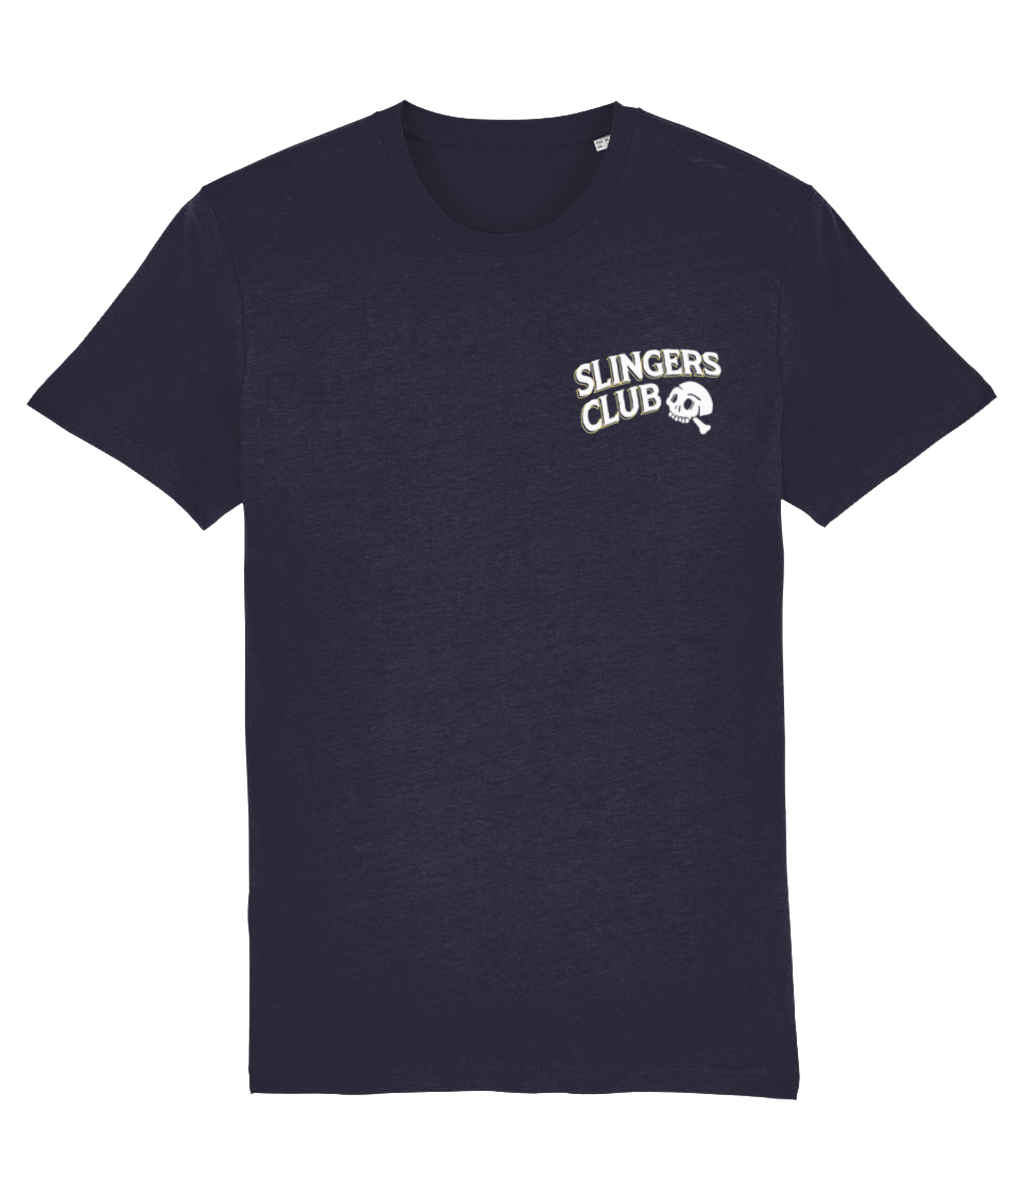 Snatching skeleton t-shirt - Slingers club